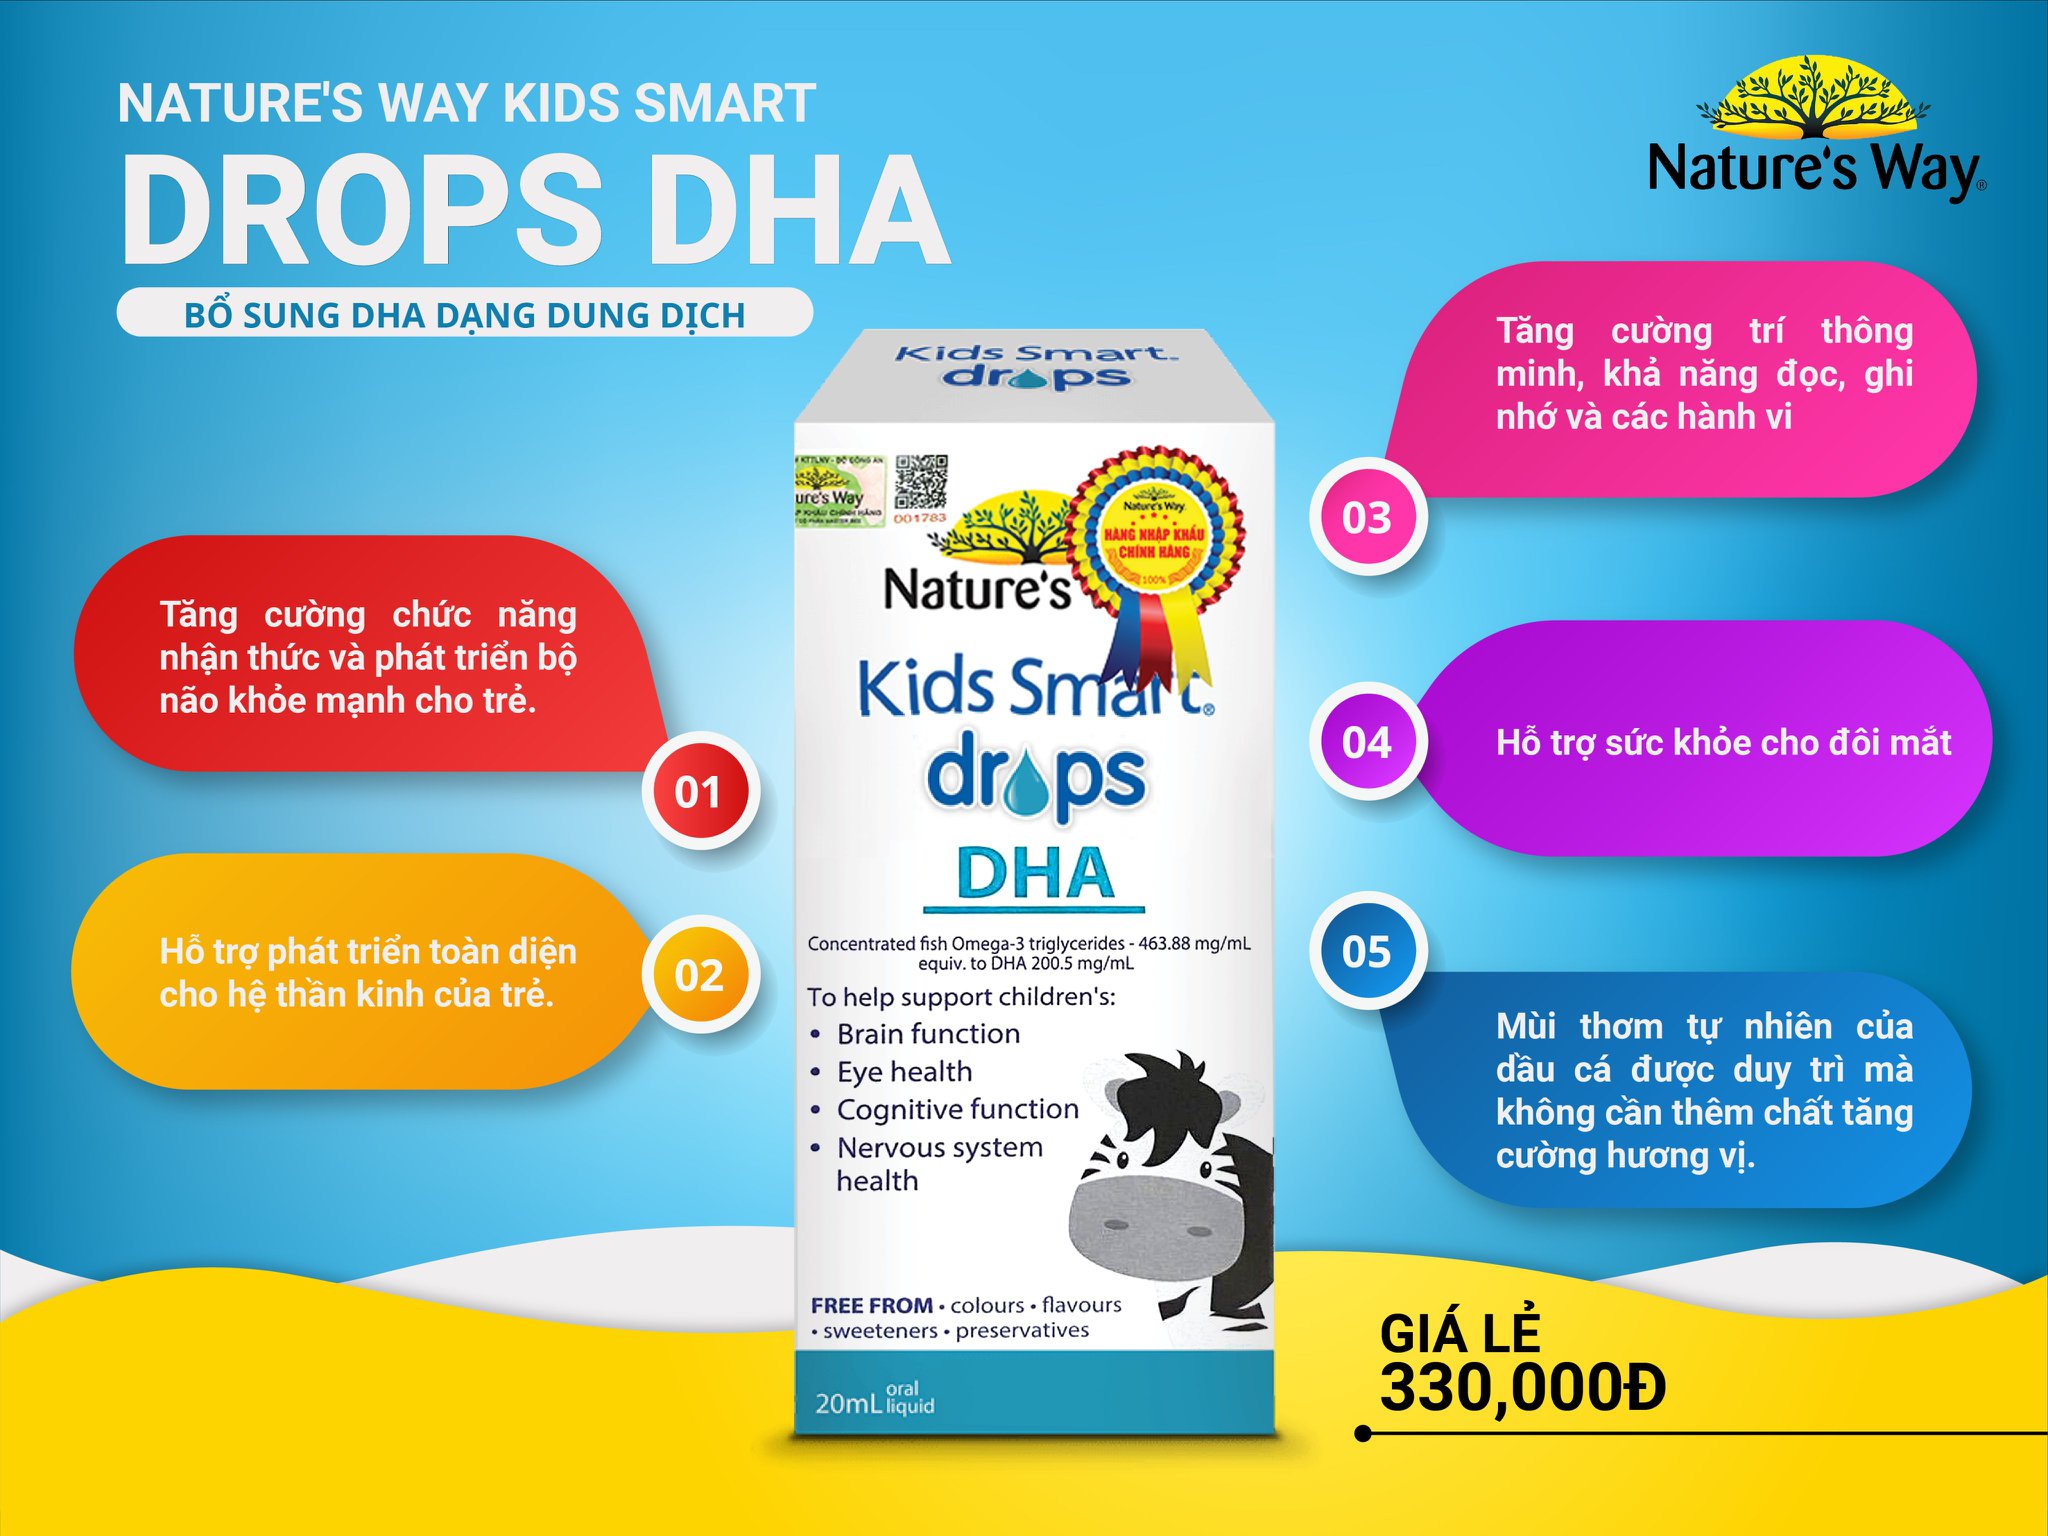 NATURE'S WAY KIDS SMART DROPS DHA - SIRO BỔ SUNG DHA DẠNG NƯỚC